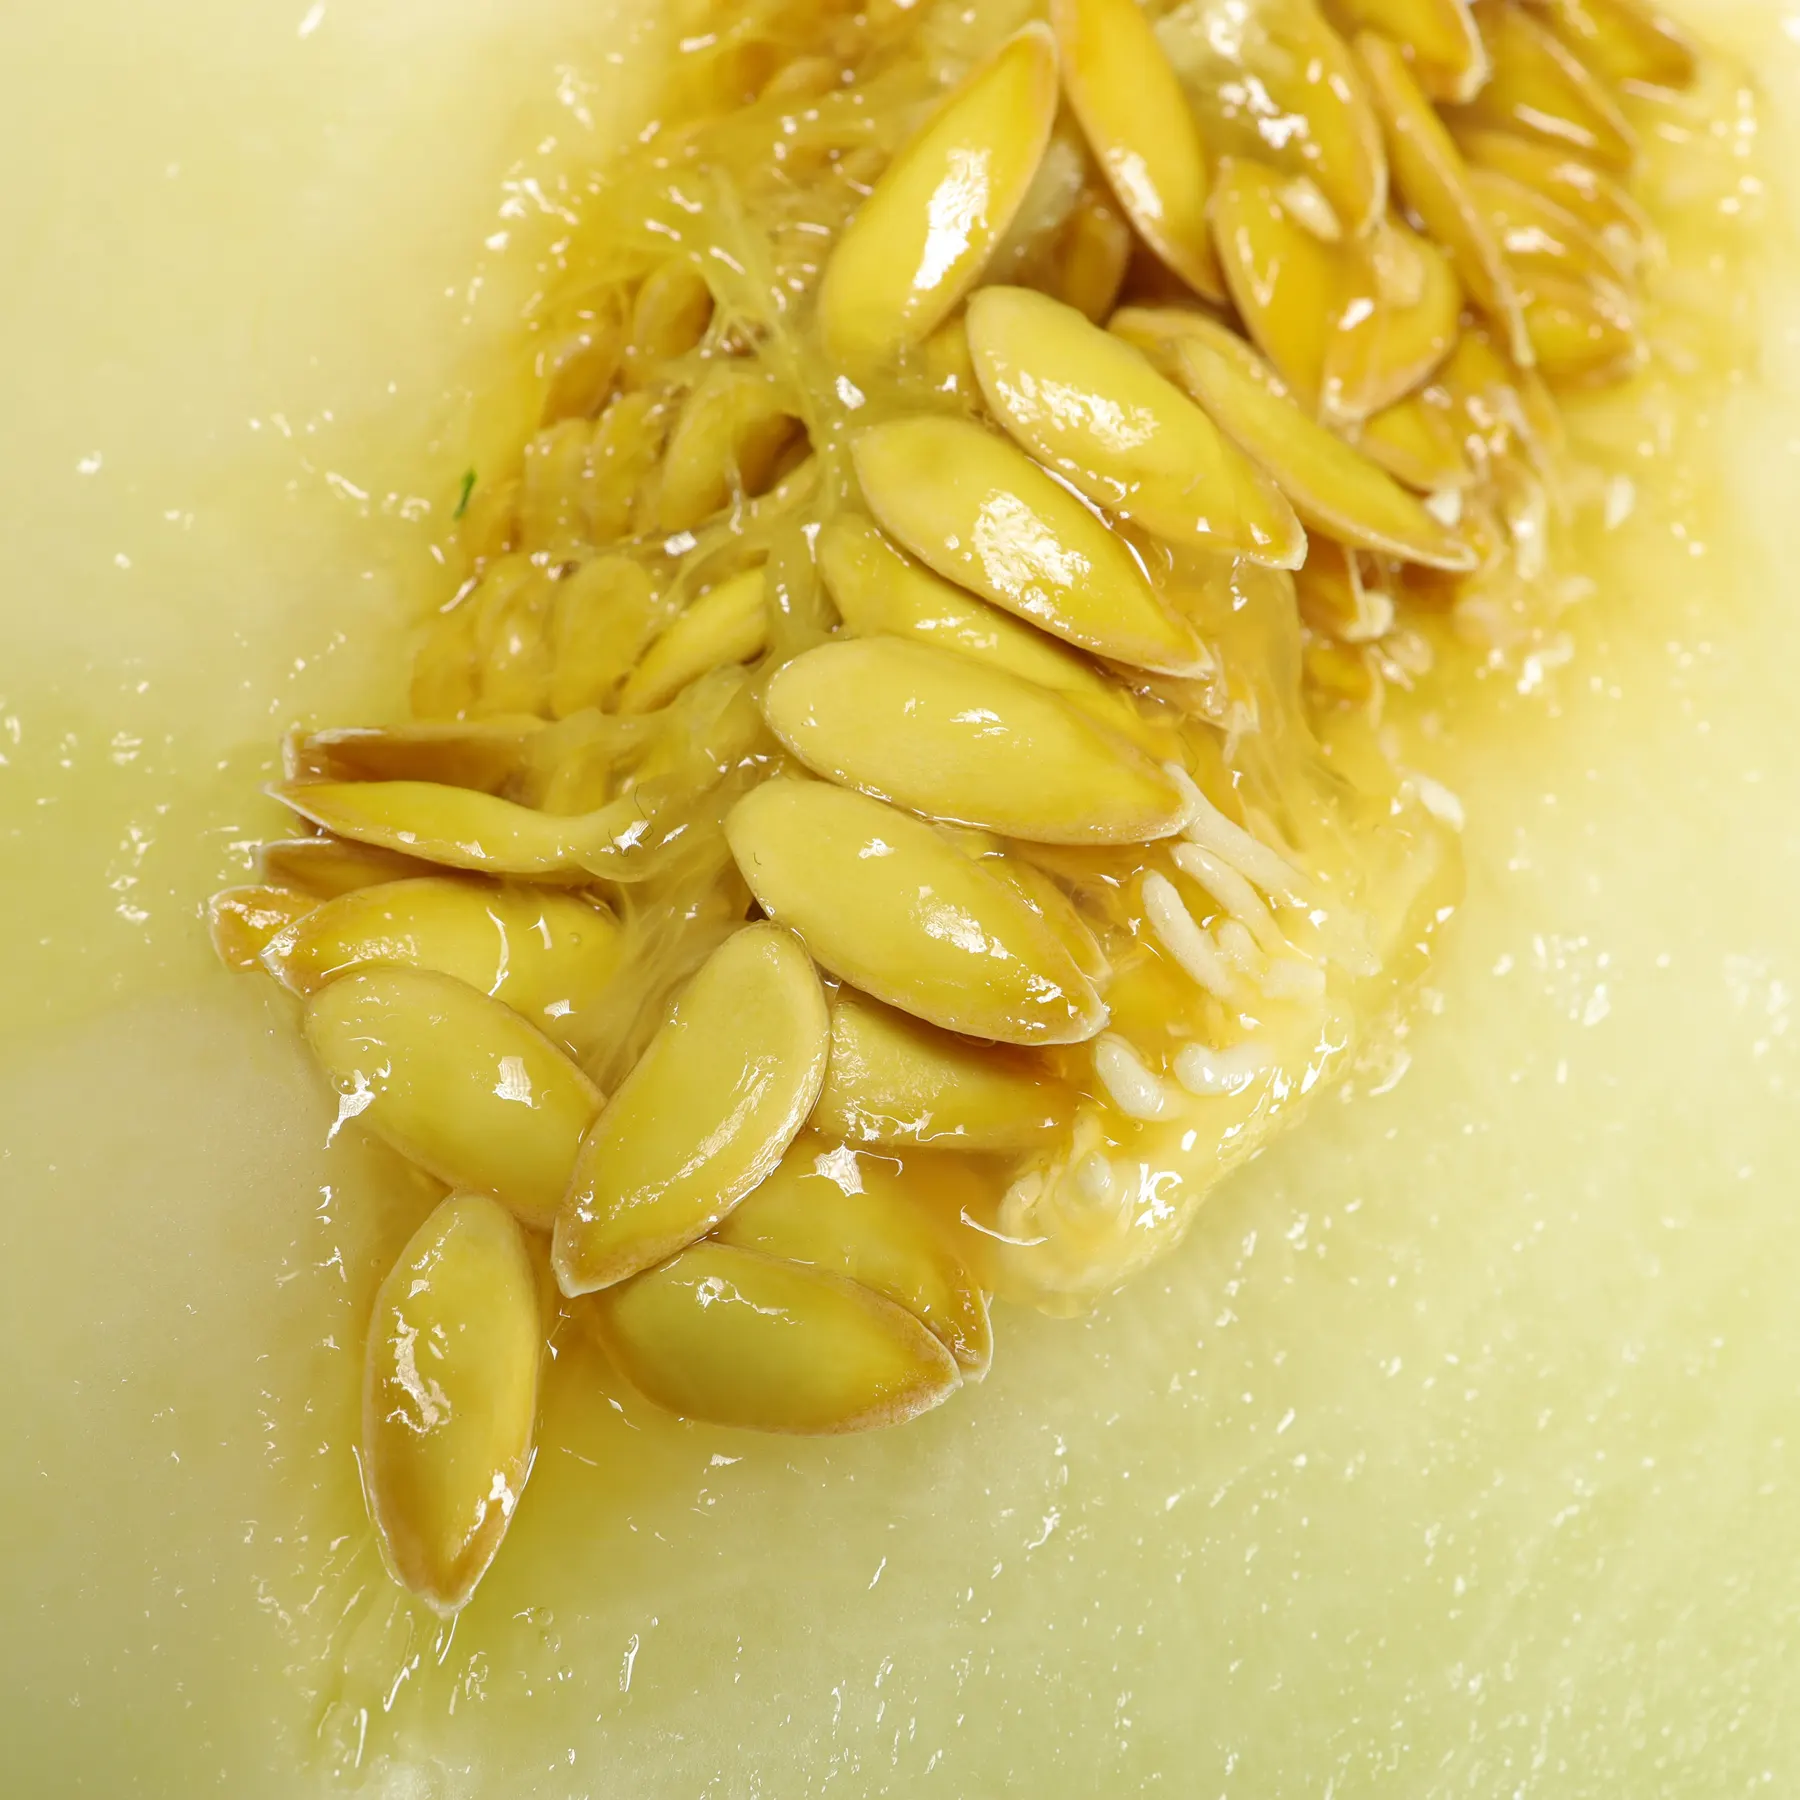 Canary Melon seeds